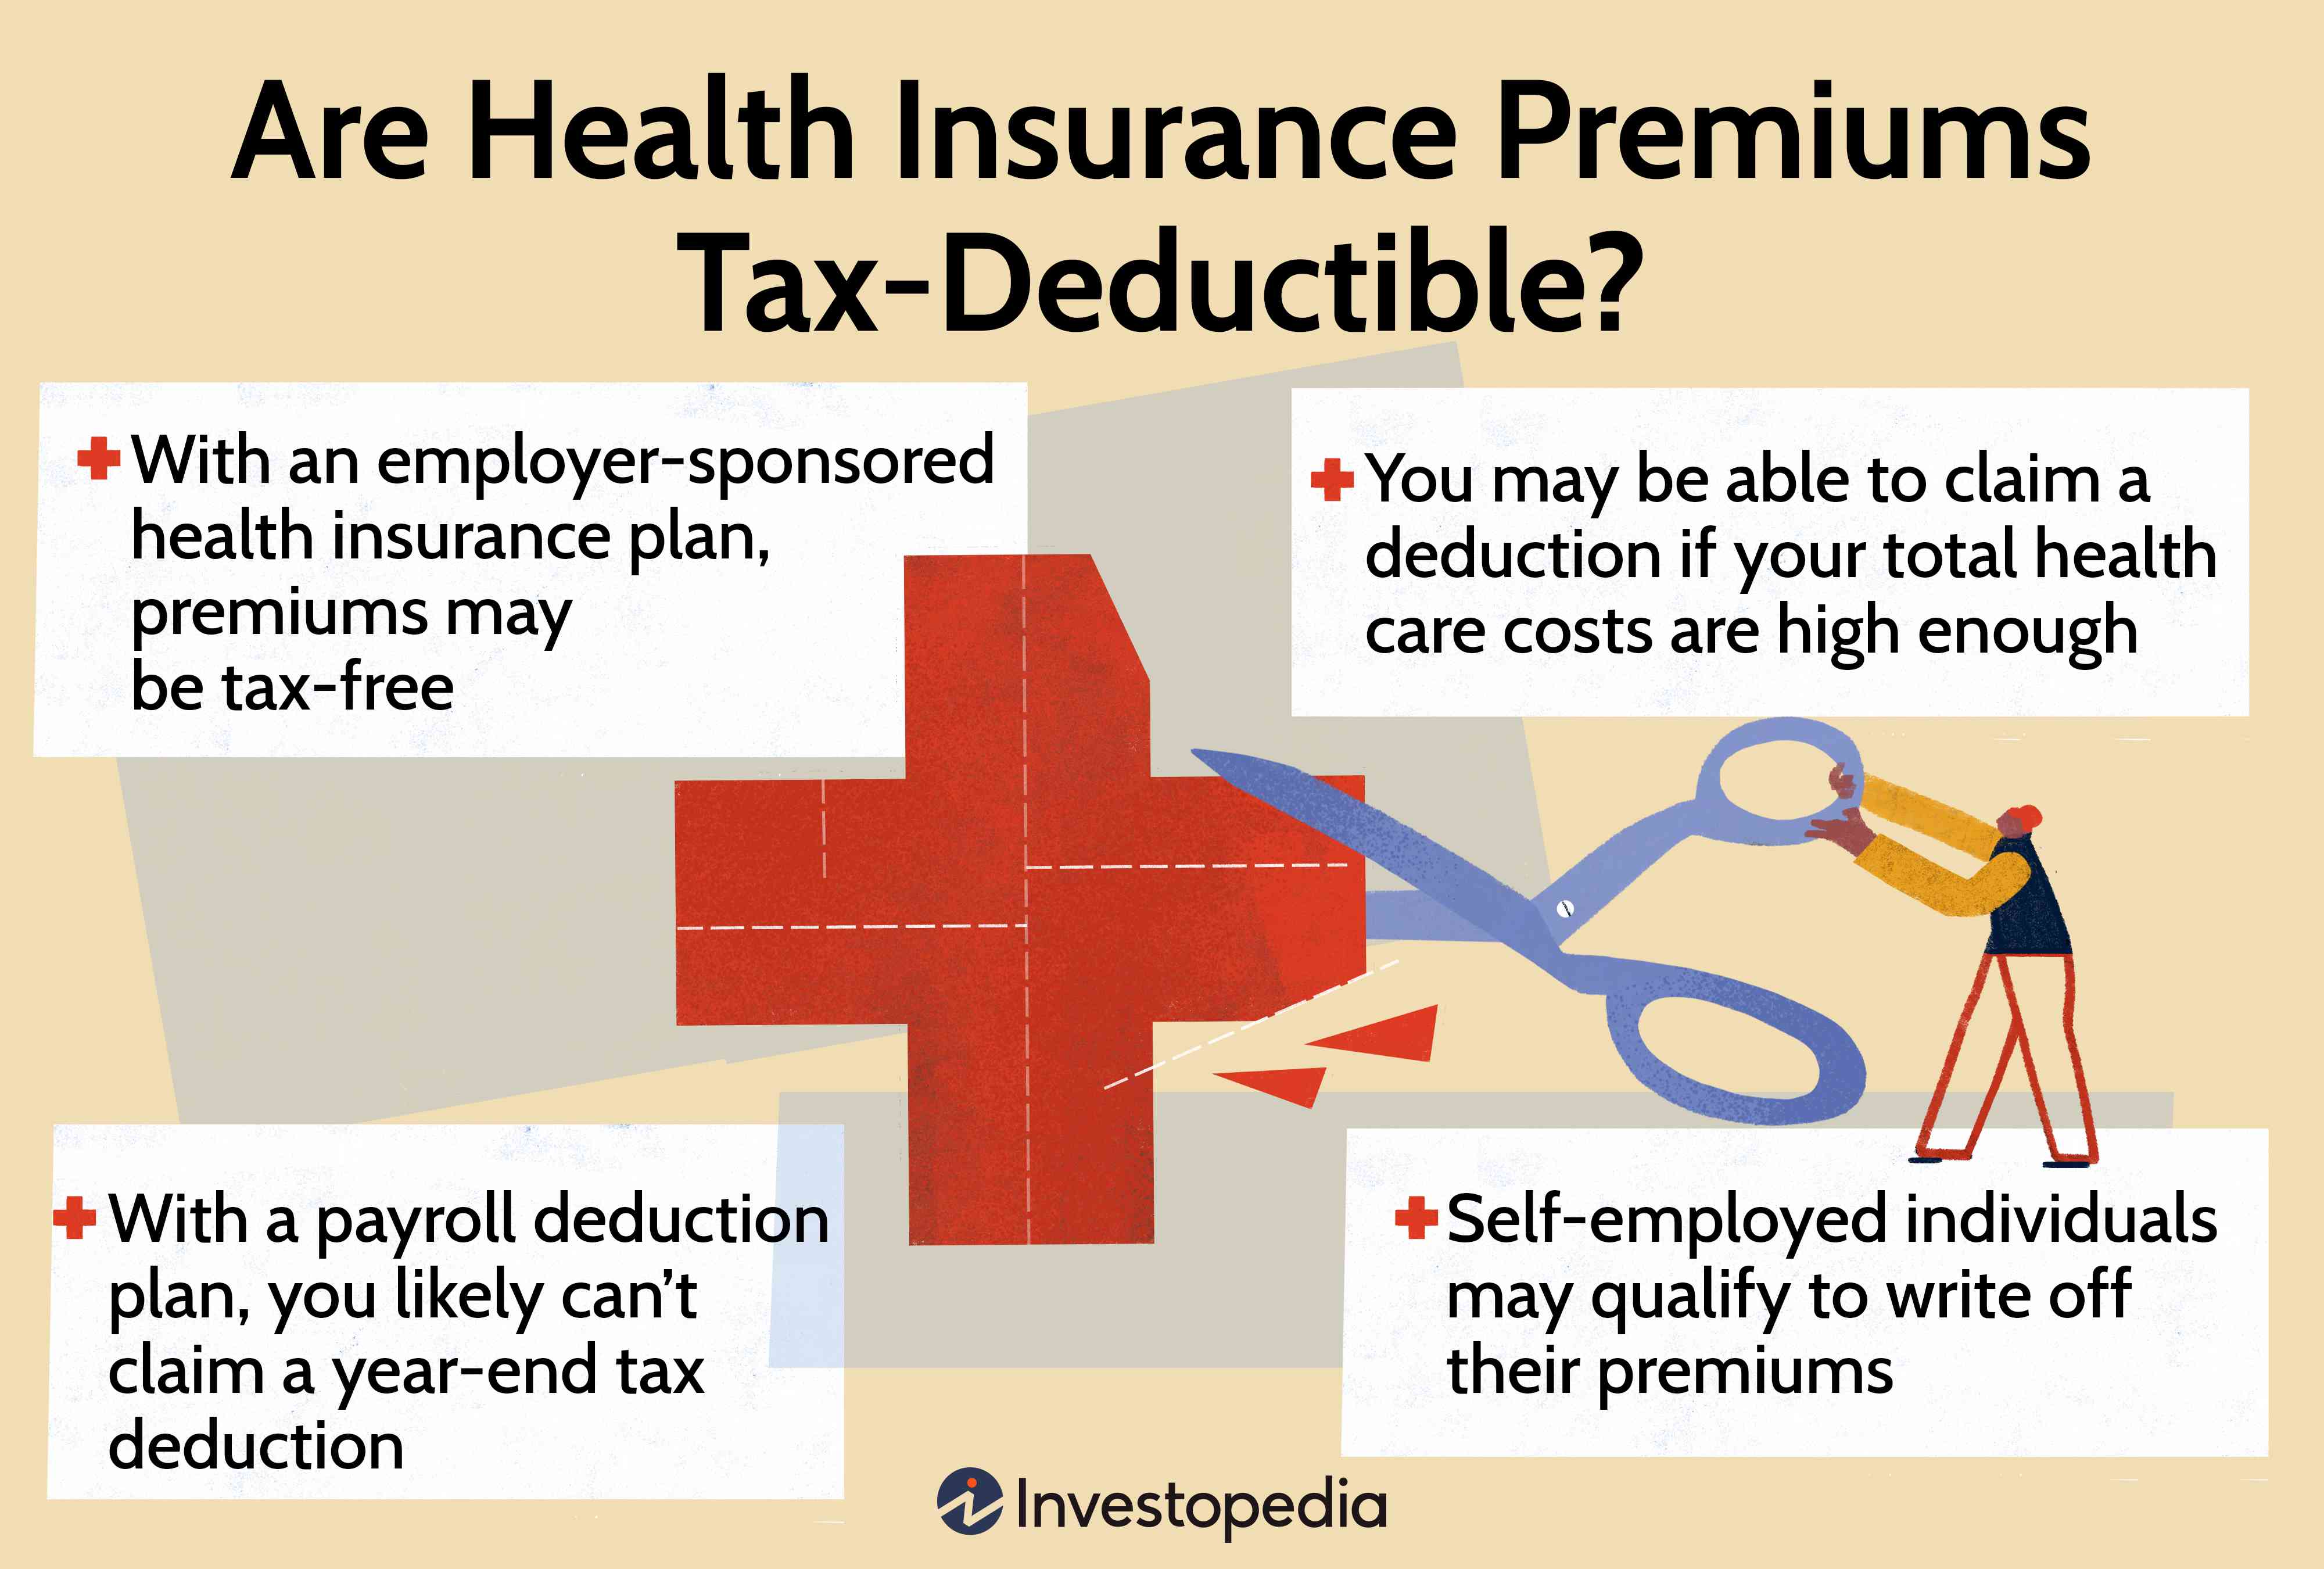 is health insurance tax deductible?